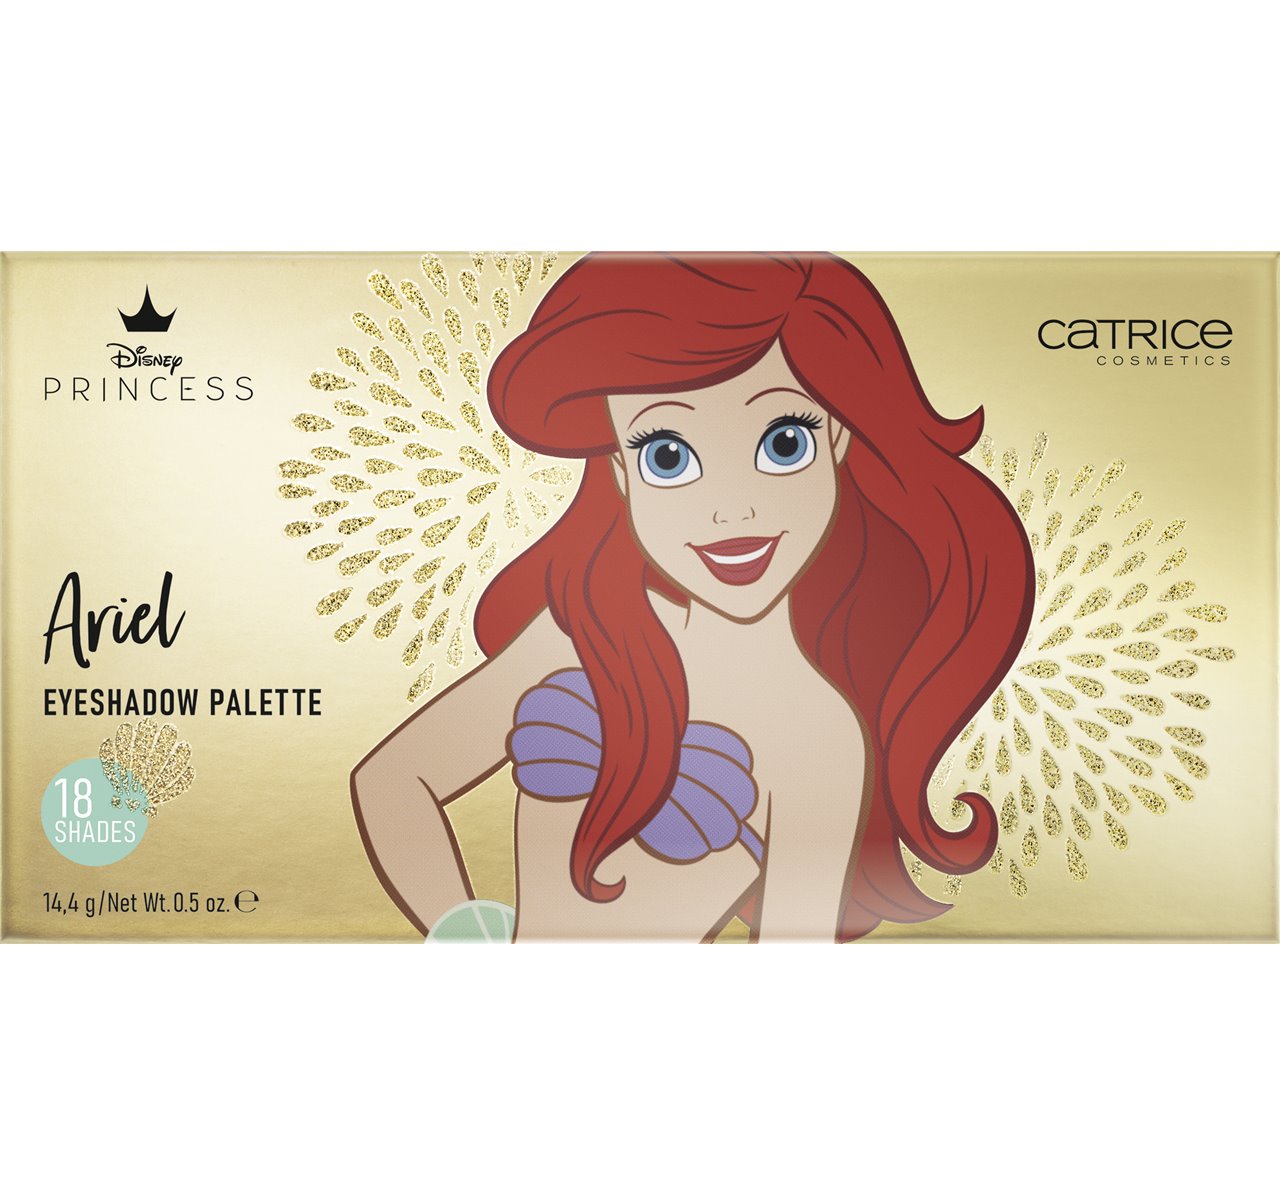 Catrice Disney Princess Ariel Eyeshadow Palette 010 14,4g